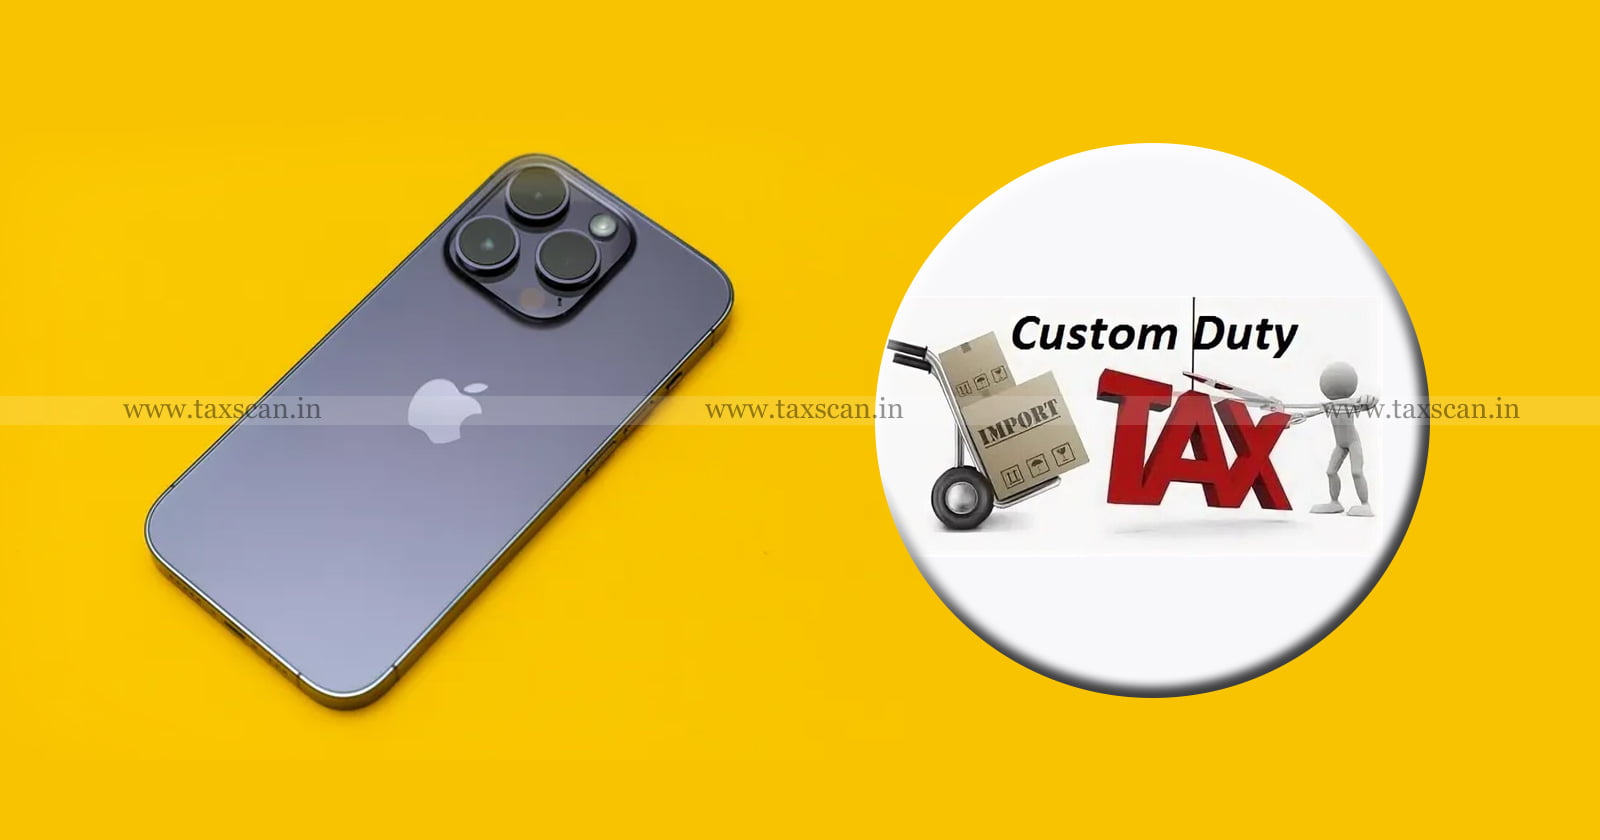 Misdeclaration - in - iPhone - Customs - Duty - evasion - Bombay - HC - bail - TAXSCAN